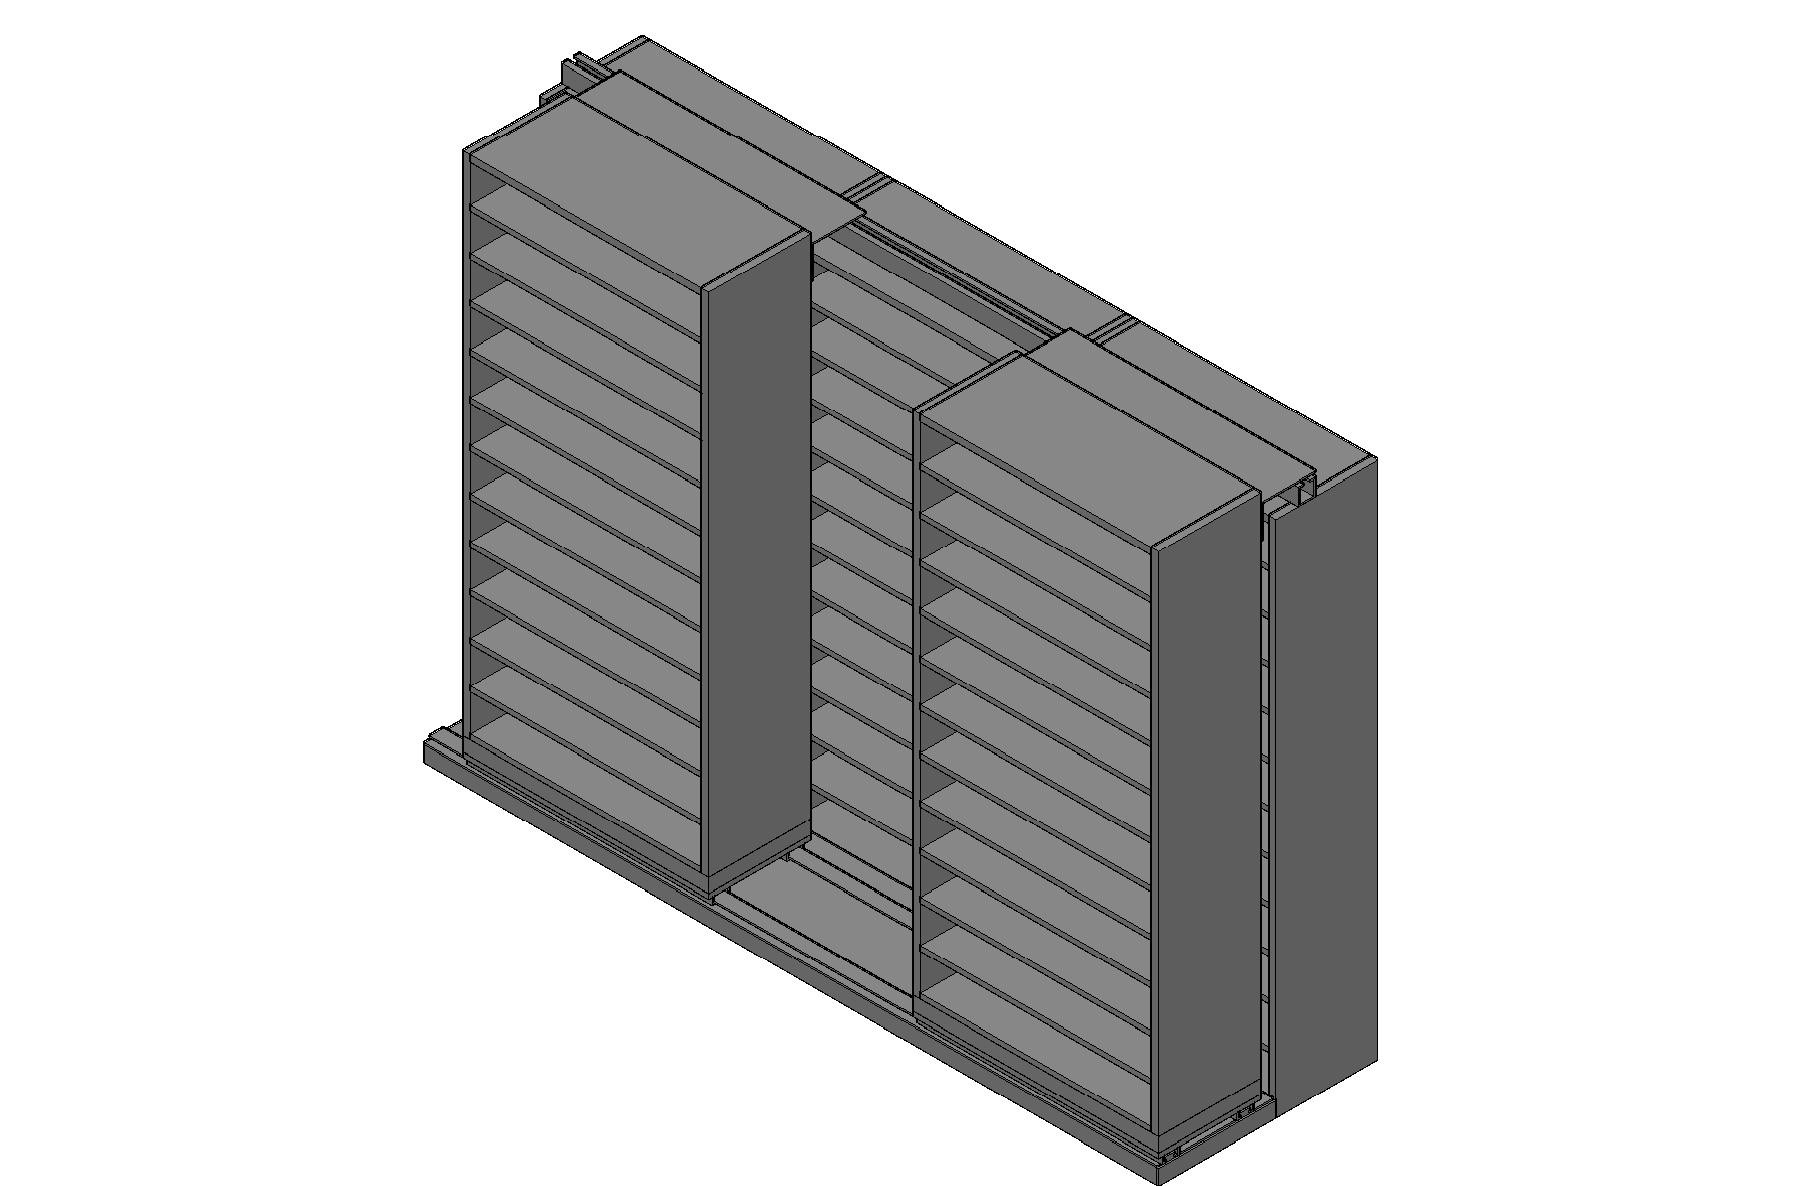 Bin Size Sliding Shelves - 2 Rows Deep - 12 Levels - (36" x 15" Shelves) - 112" Total Width